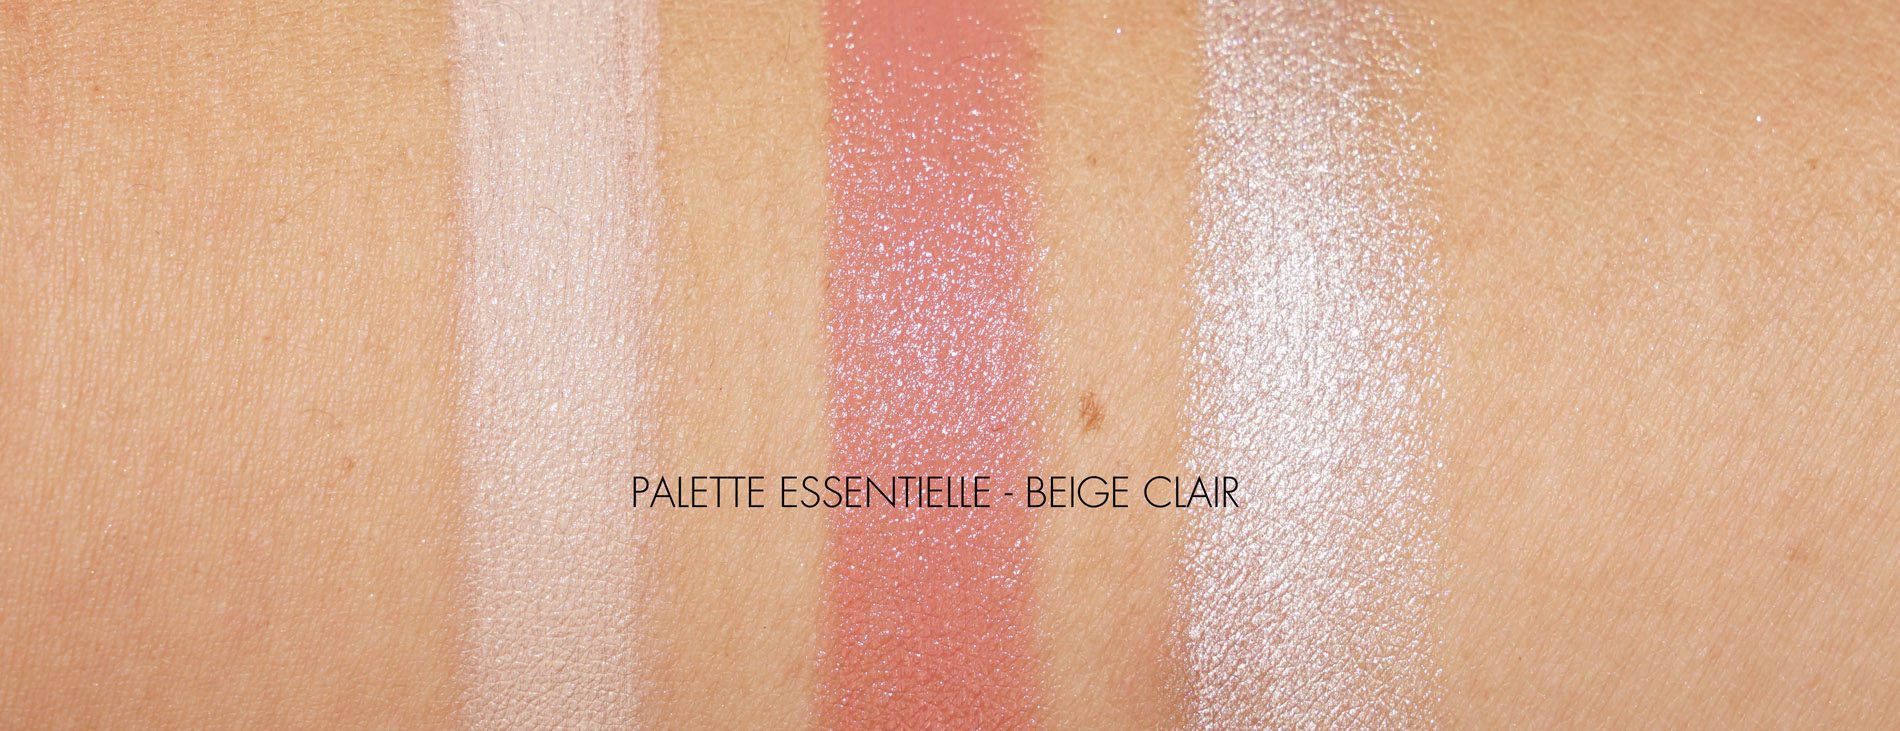 CHANEL Chanel Palette Essentielle - 150 - Beige Clair/Concealer/Highlighter//Blush  - Reviews